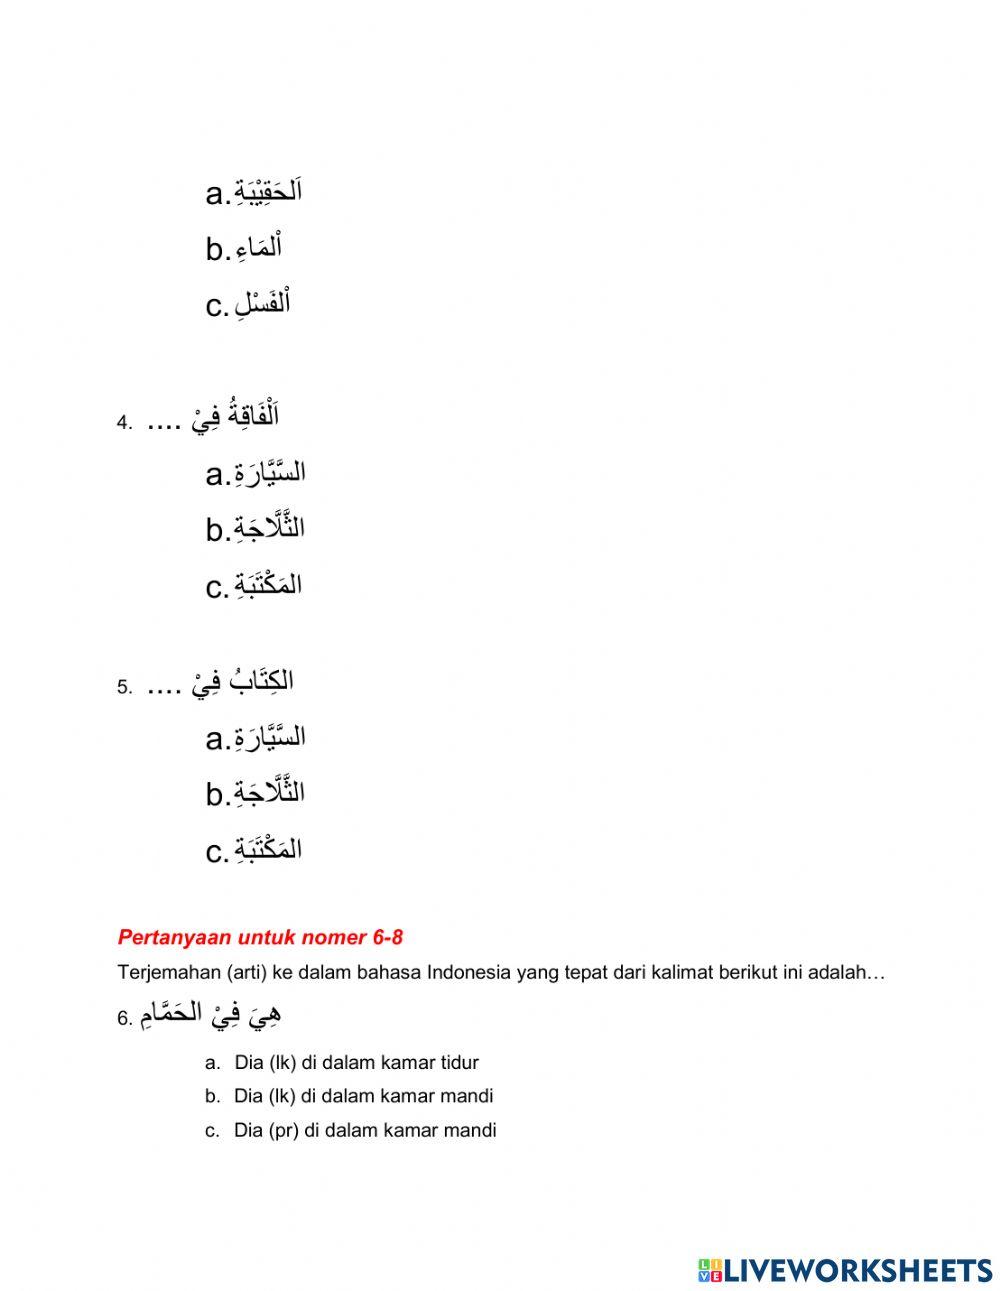 Ulangan Harian 2 Bahasa Arab